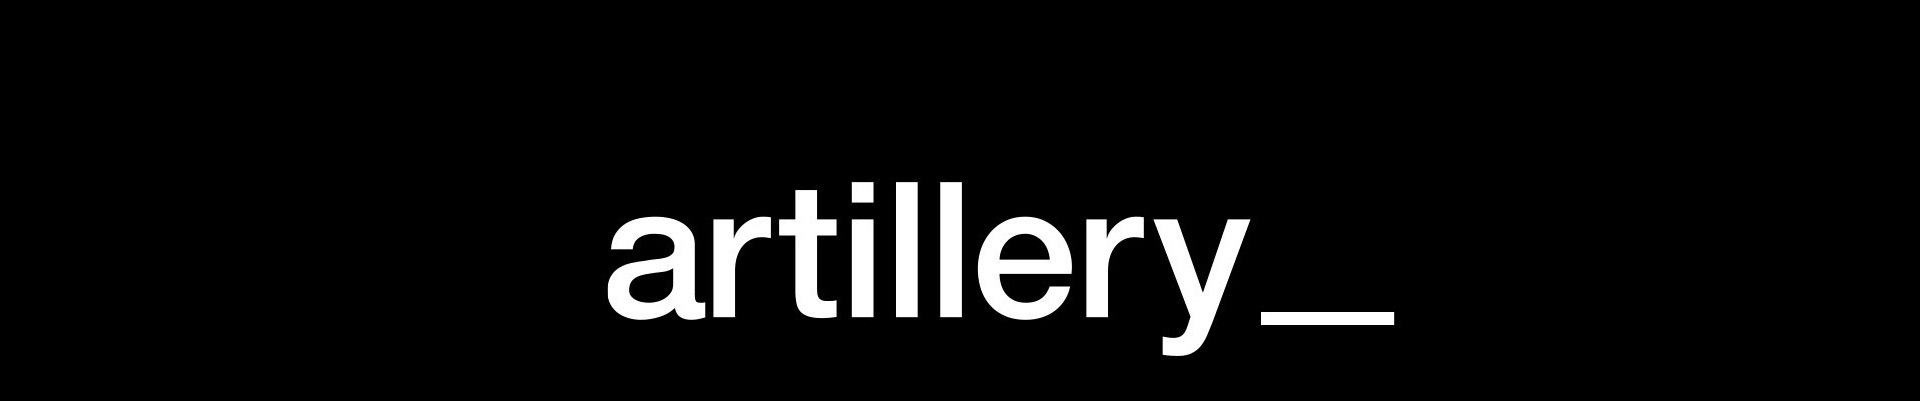 Artillery Design's profile banner